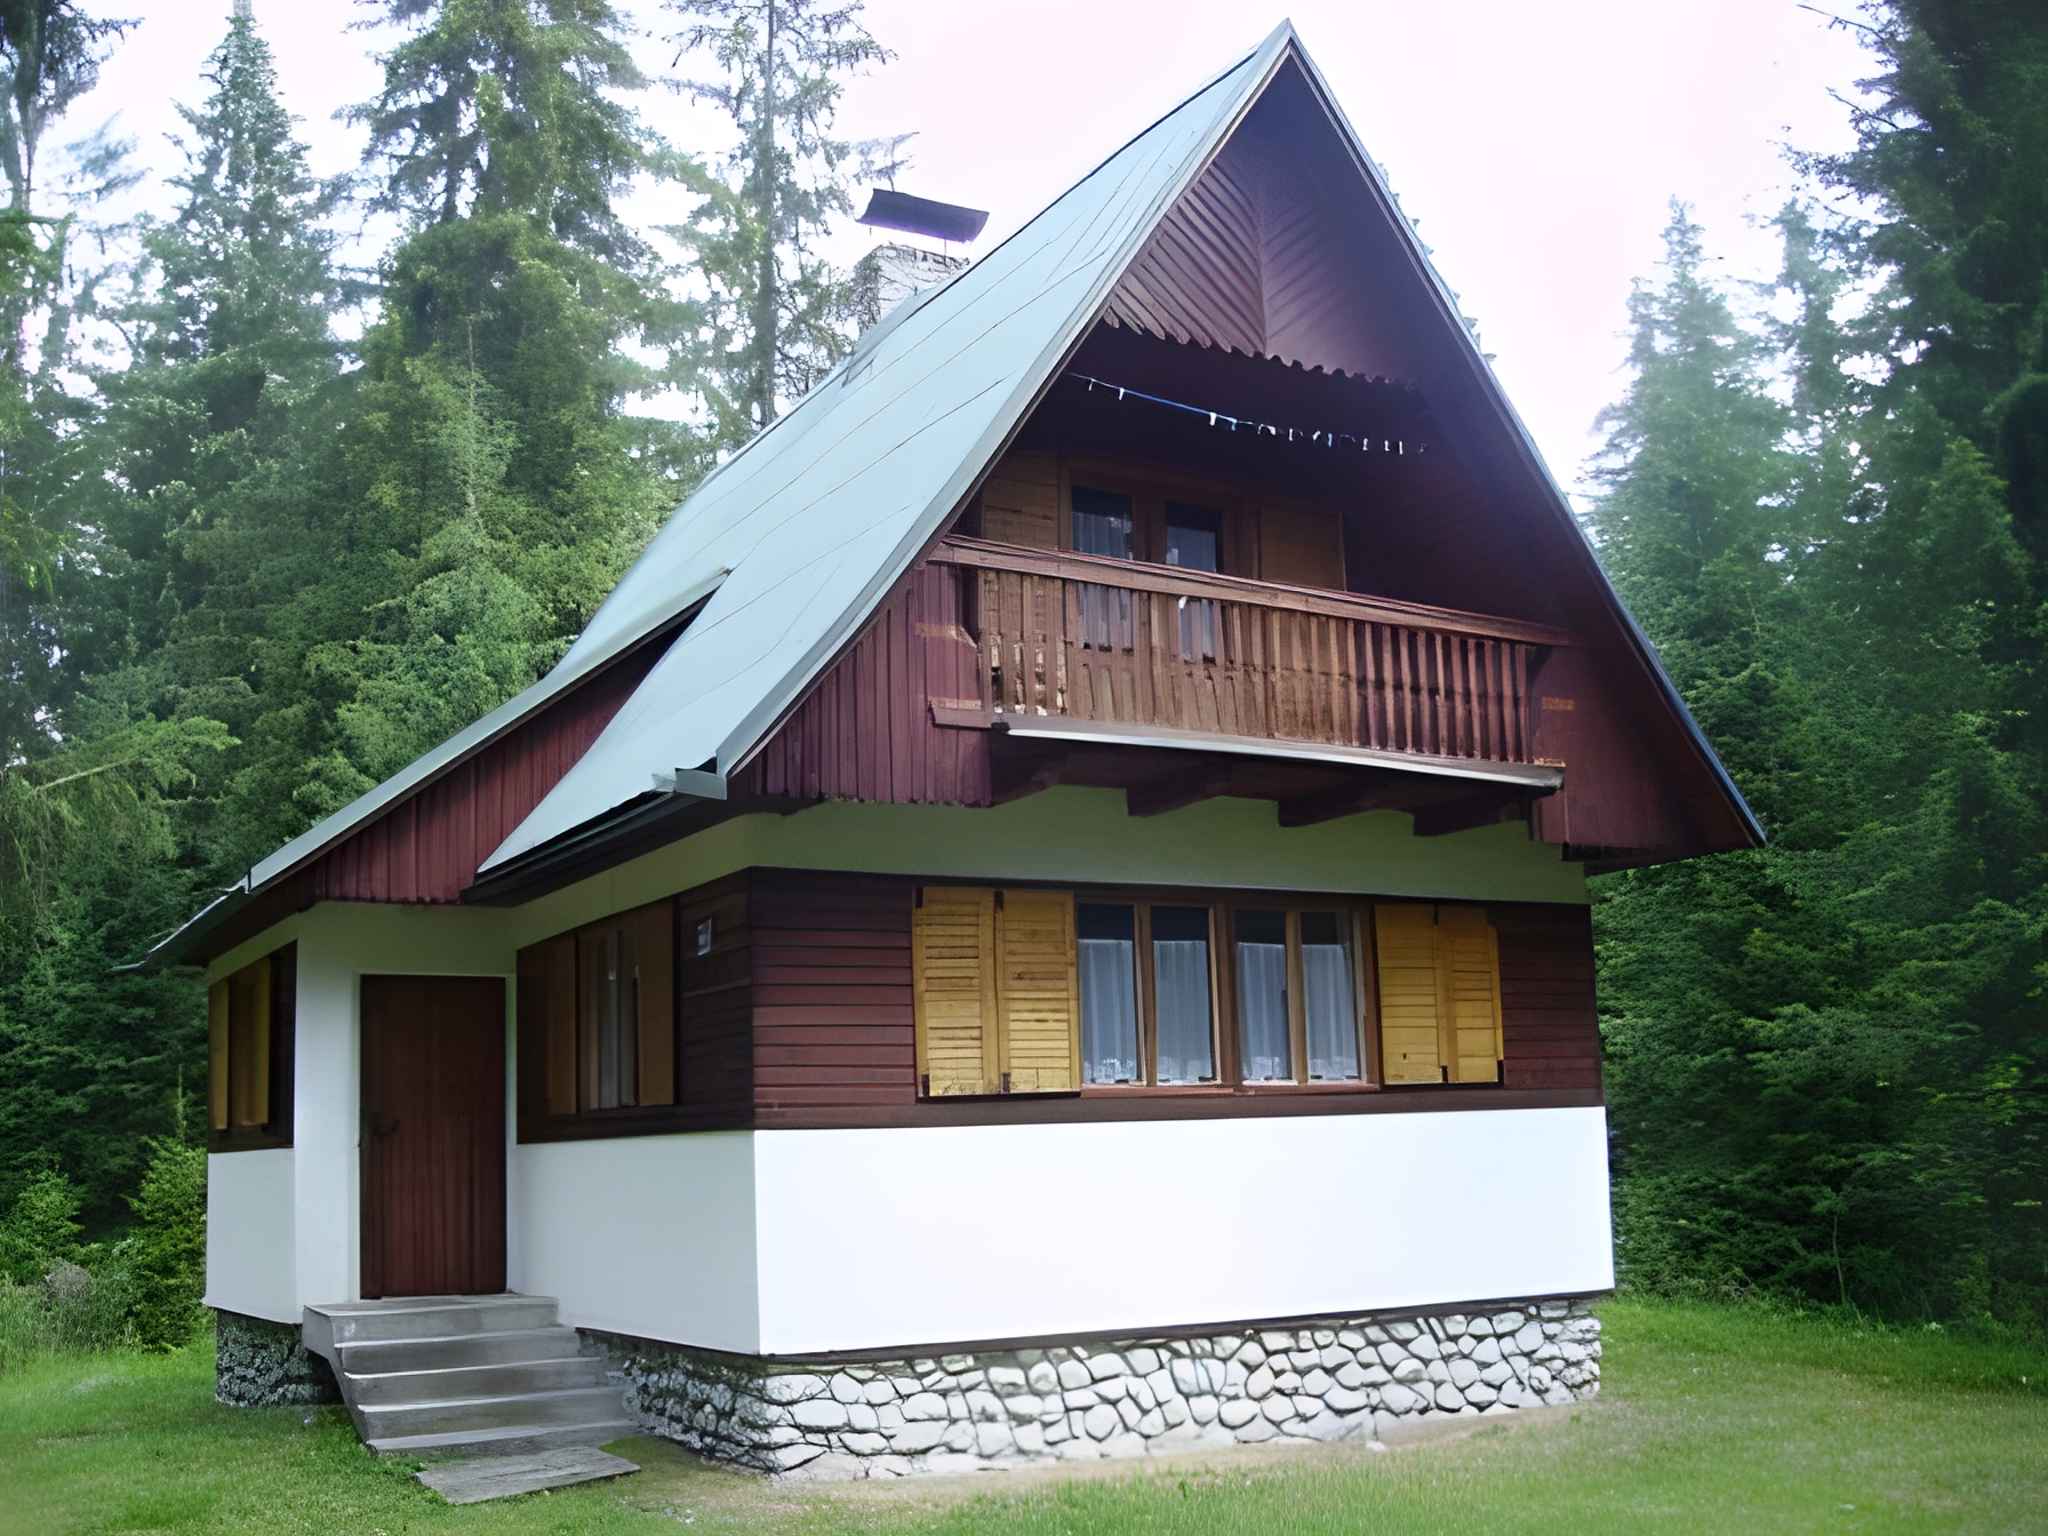 Ferienhaus in der Natur Ferienhaus in Slowakei